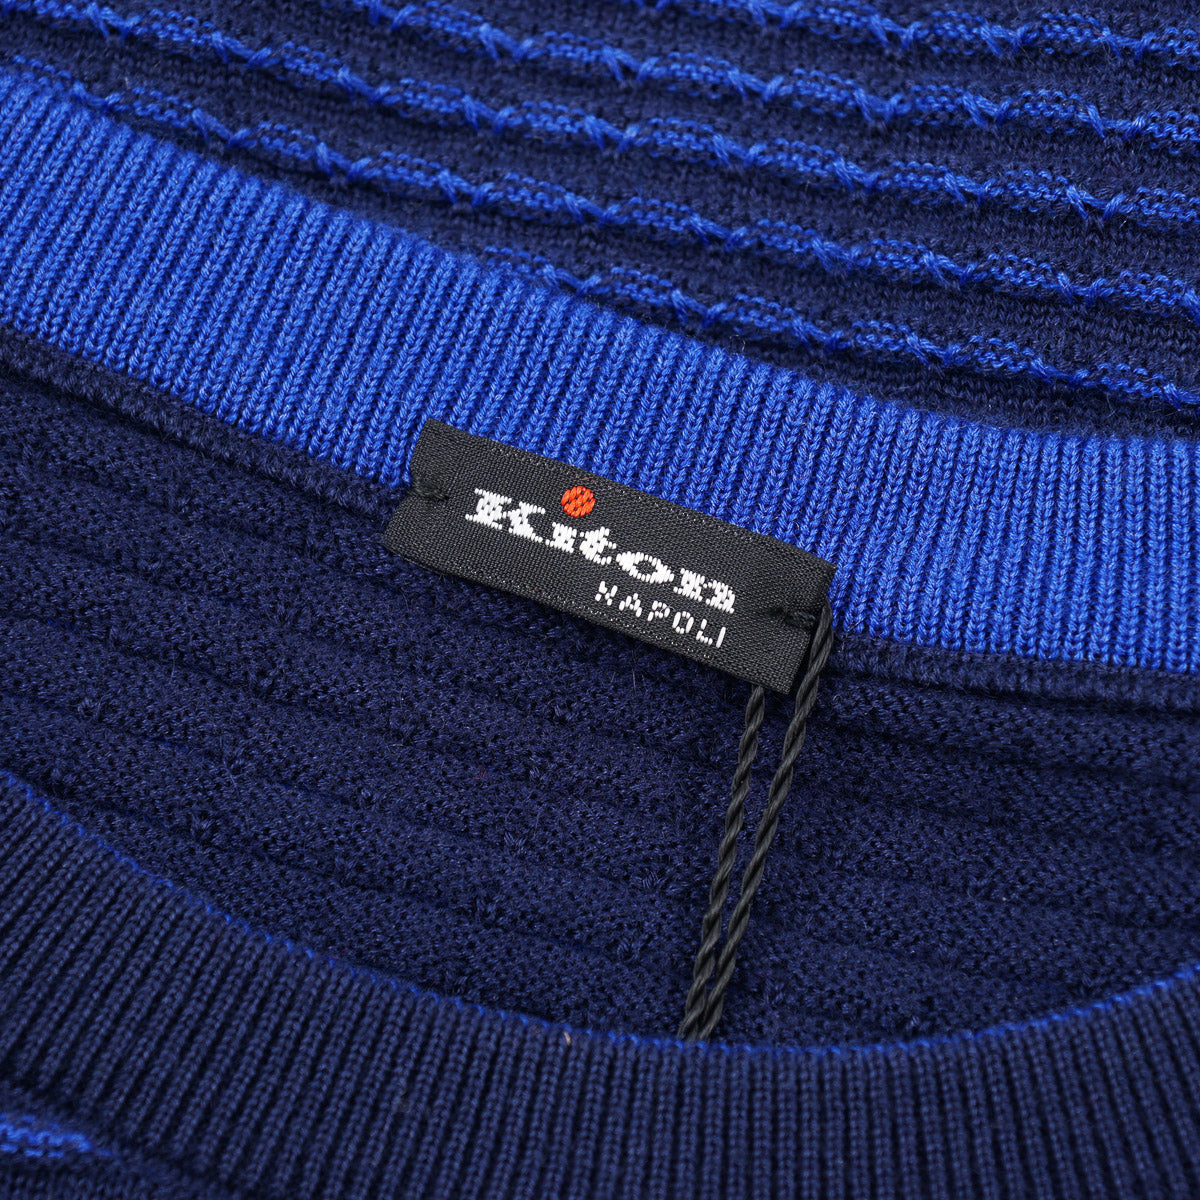 Kiton Striped Knit Cashmere Sweater - Top Shelf Apparel